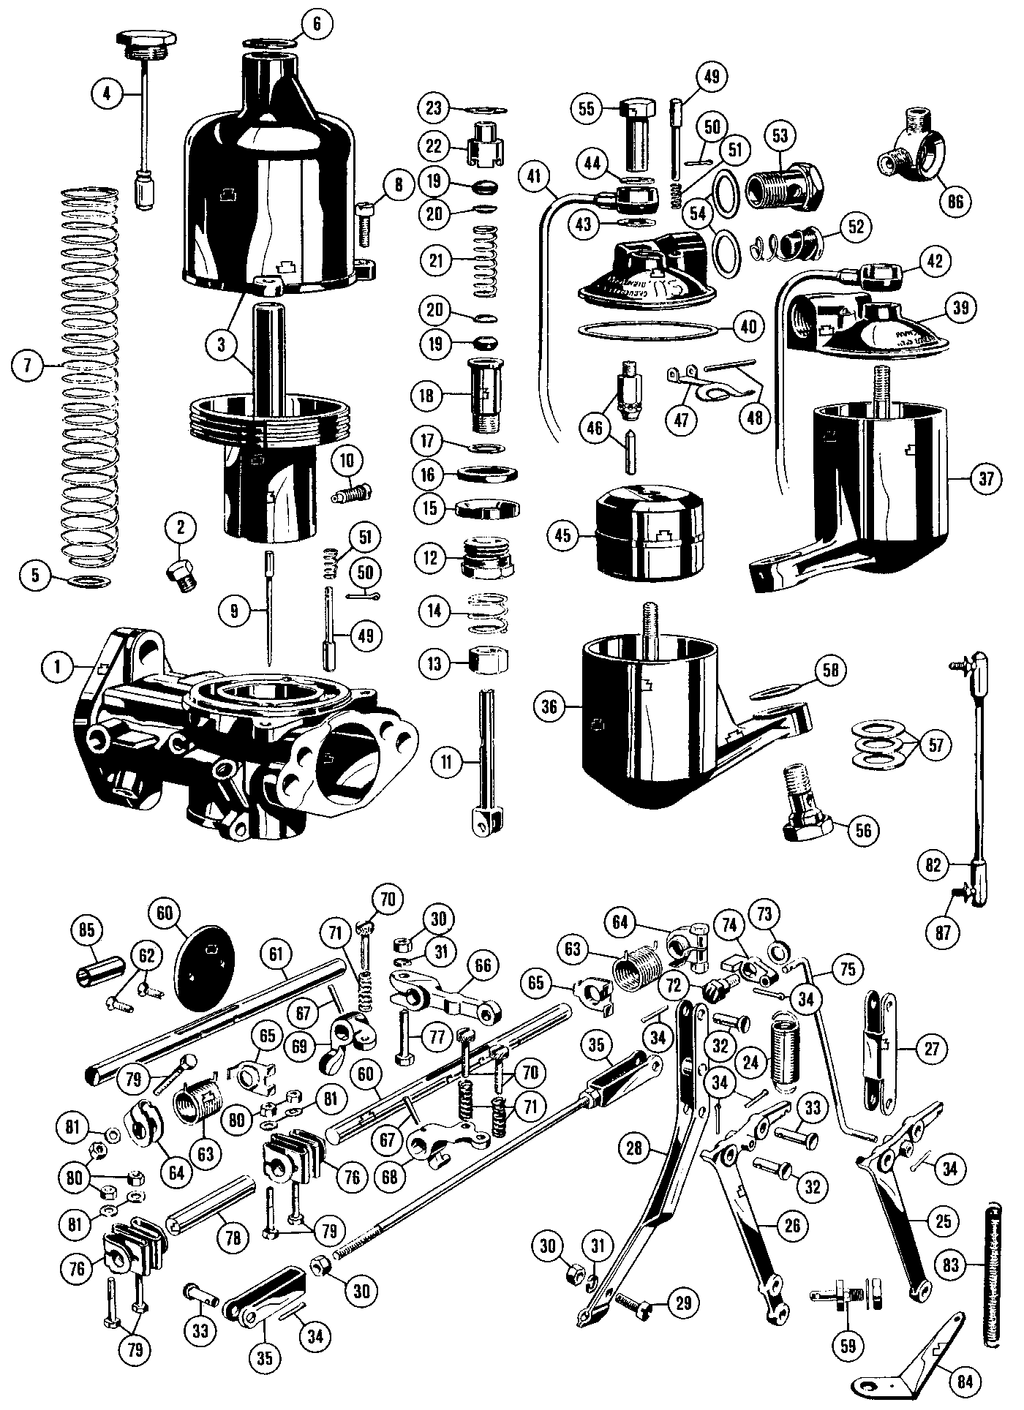 MGTD-TF 1949-1955 - Chokes | Webshop Anglo Parts - Carburettors H4 - 1